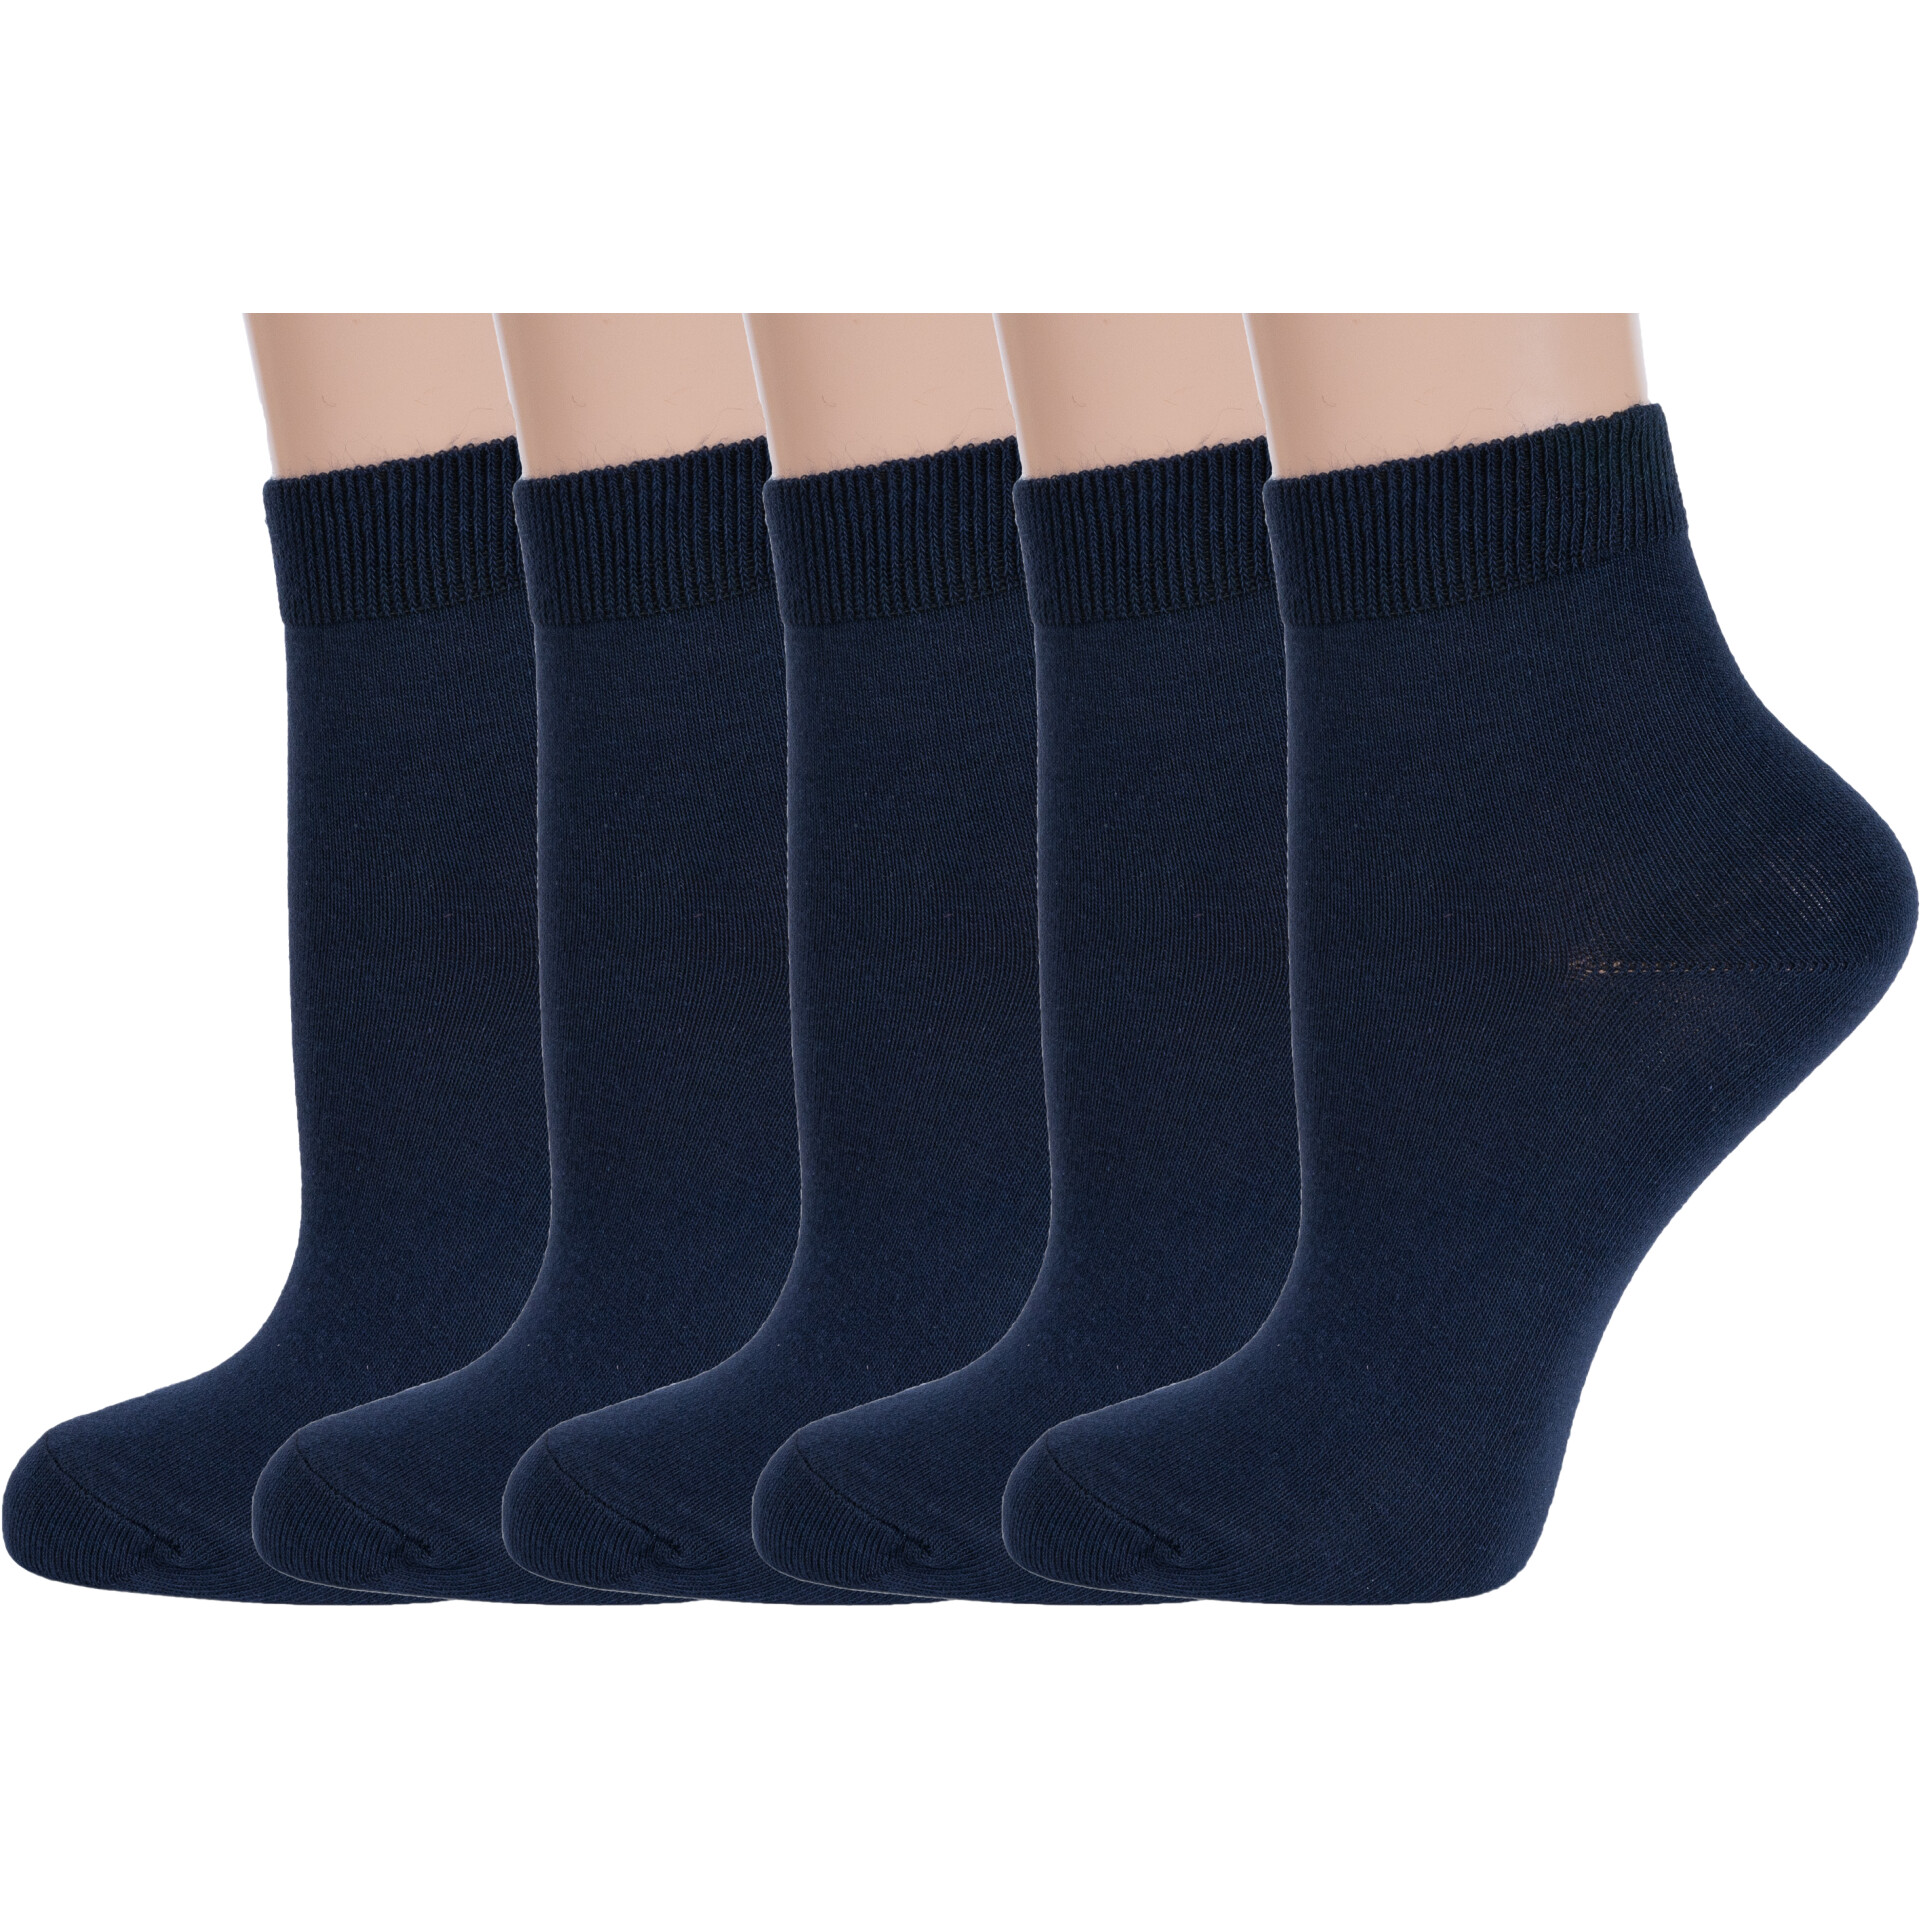 Комплект носков женских Rusocks 5-С-420/1 синих 23-25, 5 пар